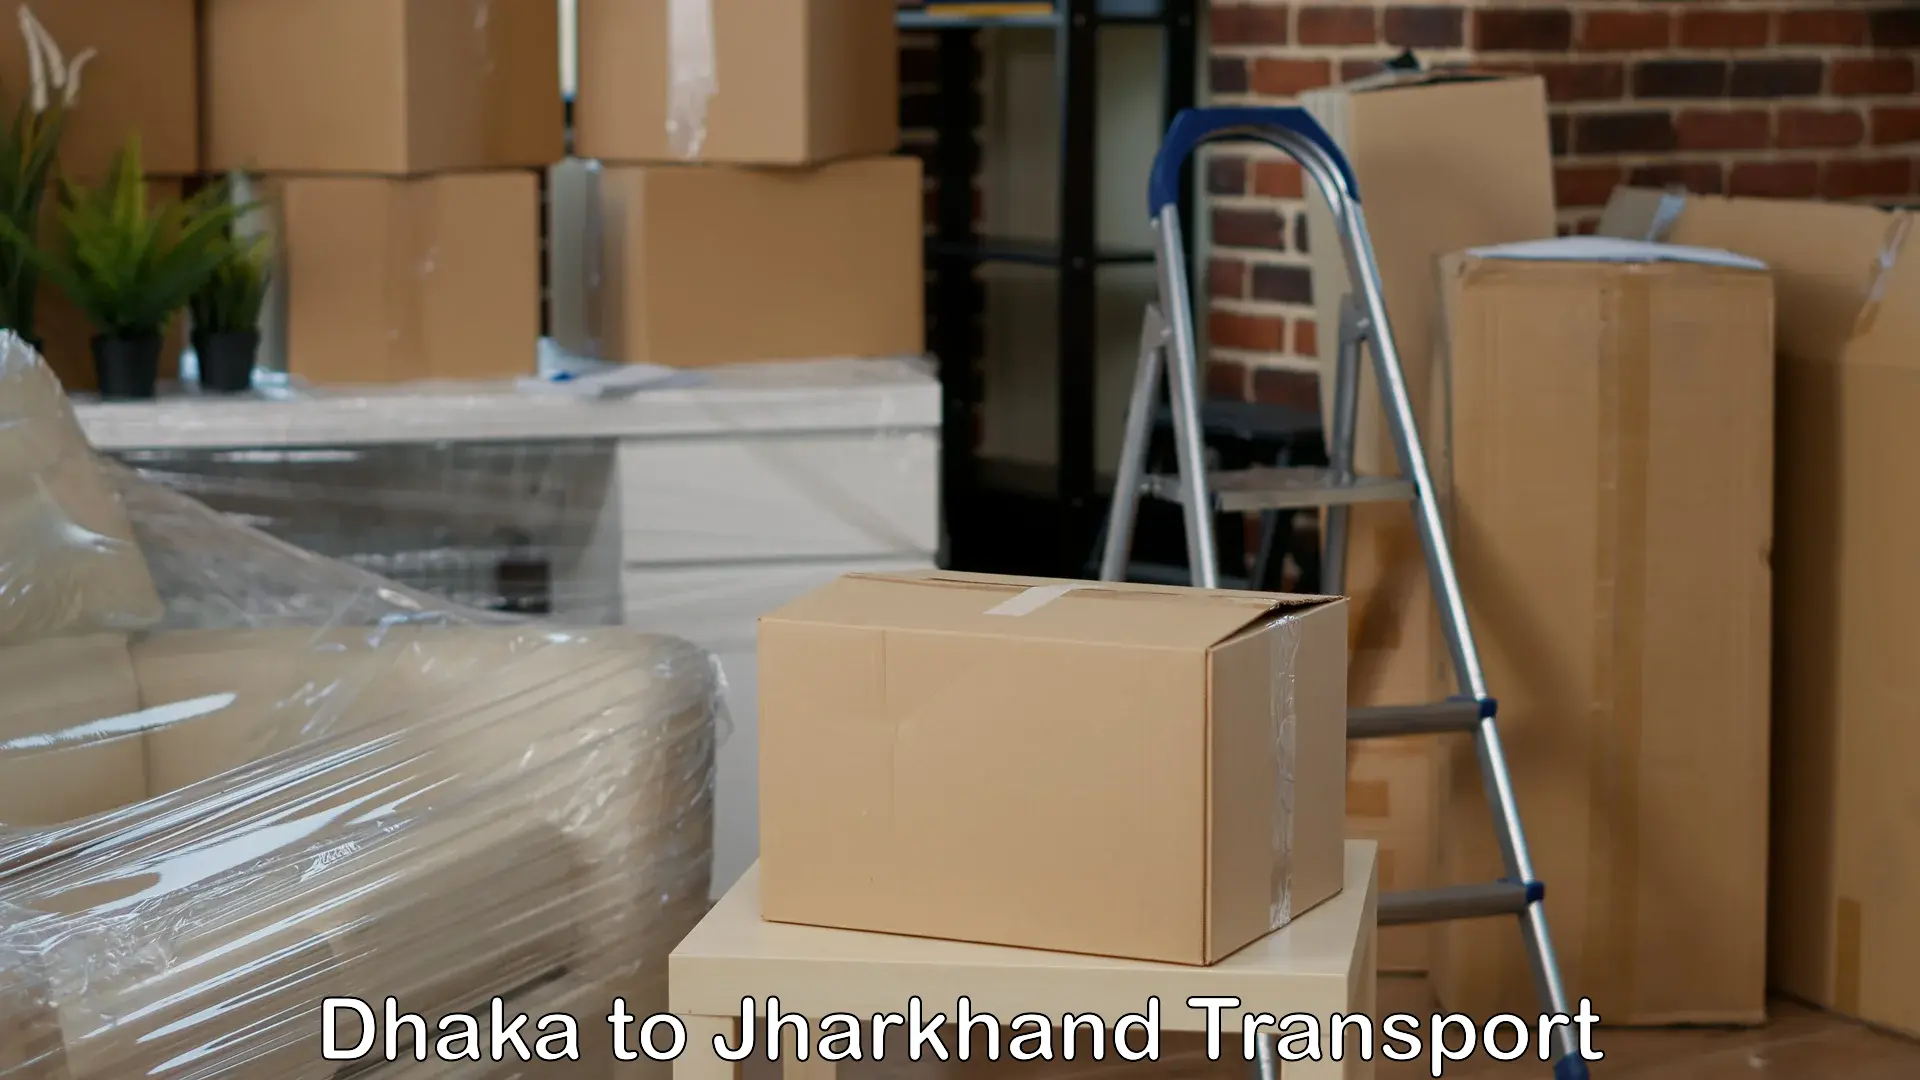 Truck transport companies in India Dhaka to Rajdhanwar